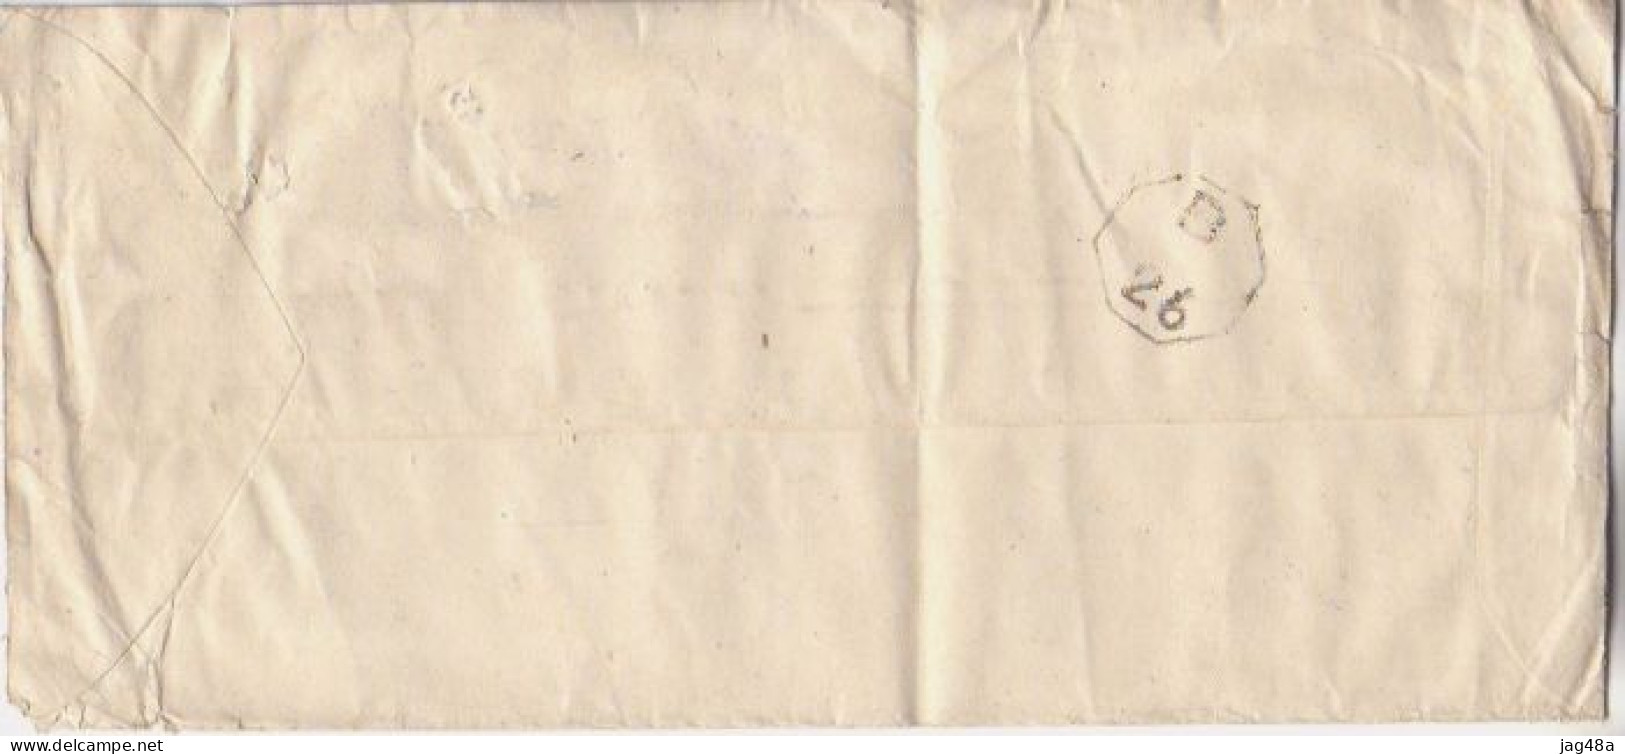 INDIA. 1945/Simla, RedCross-envelope/censored. - 1936-47 King George VI